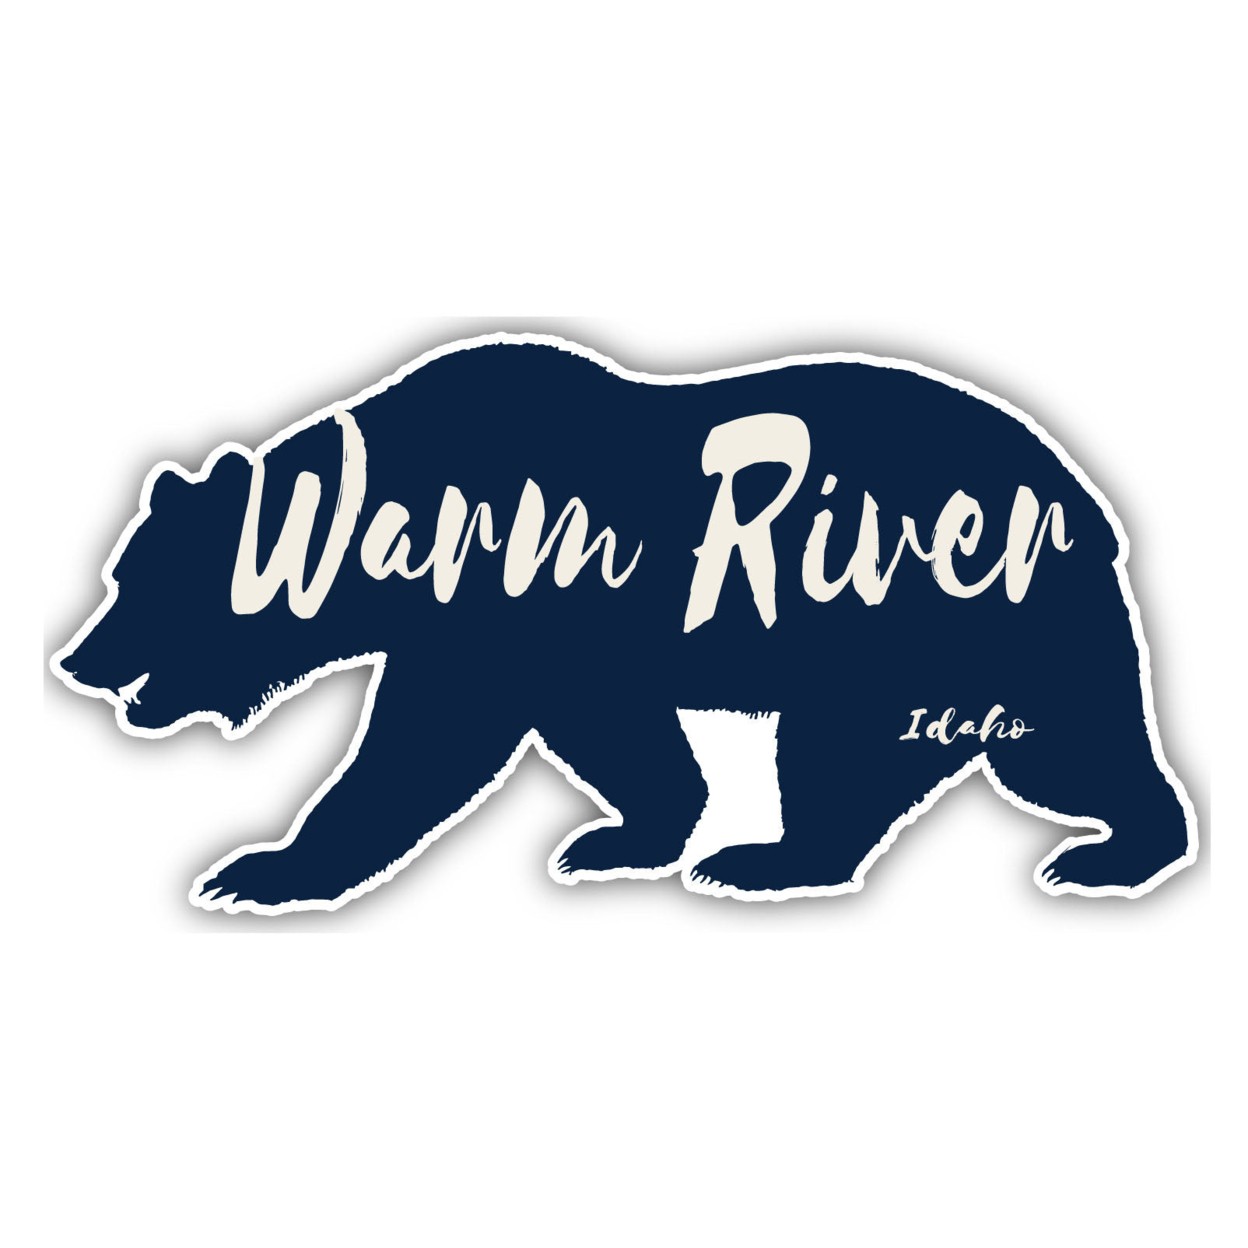 Warm River Idaho Souvenir Decorative Stickers (Choose Theme And Size) - Single Unit, 4-Inch, Bear